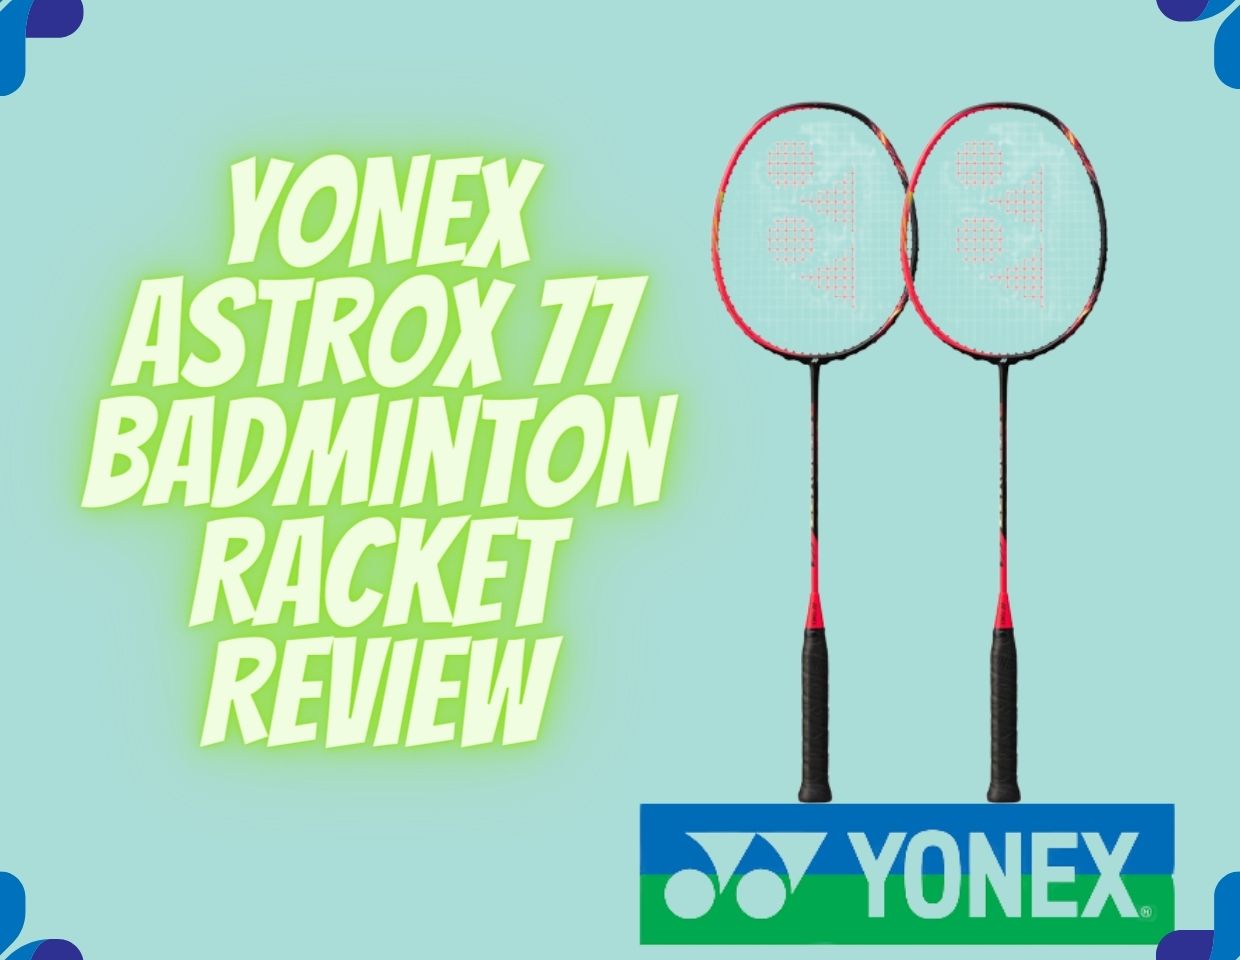 YONEX Astrox 77 Badminton Racket Review